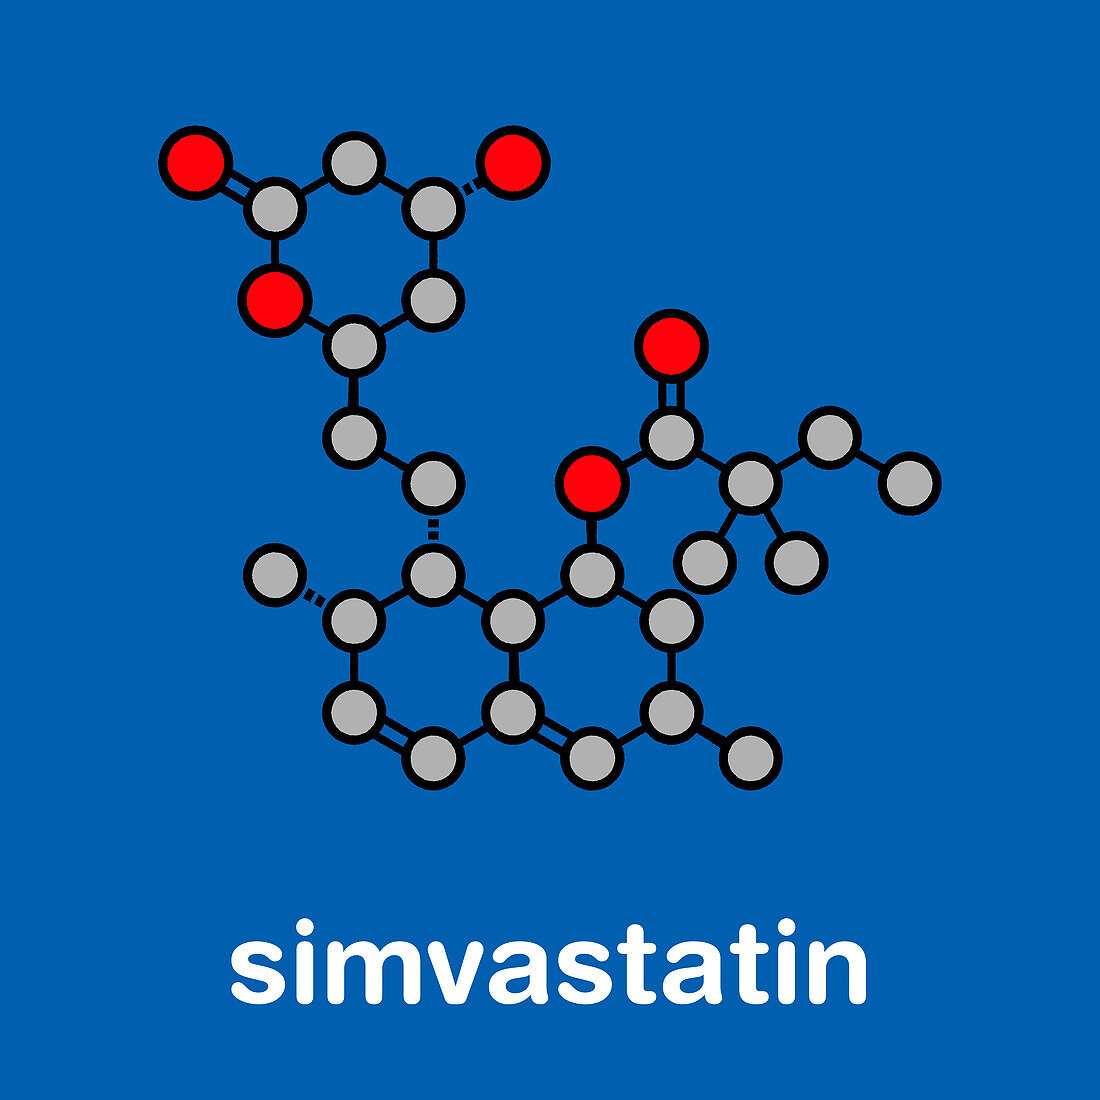 Simvastatin cholesterol lowering drug, molecular model